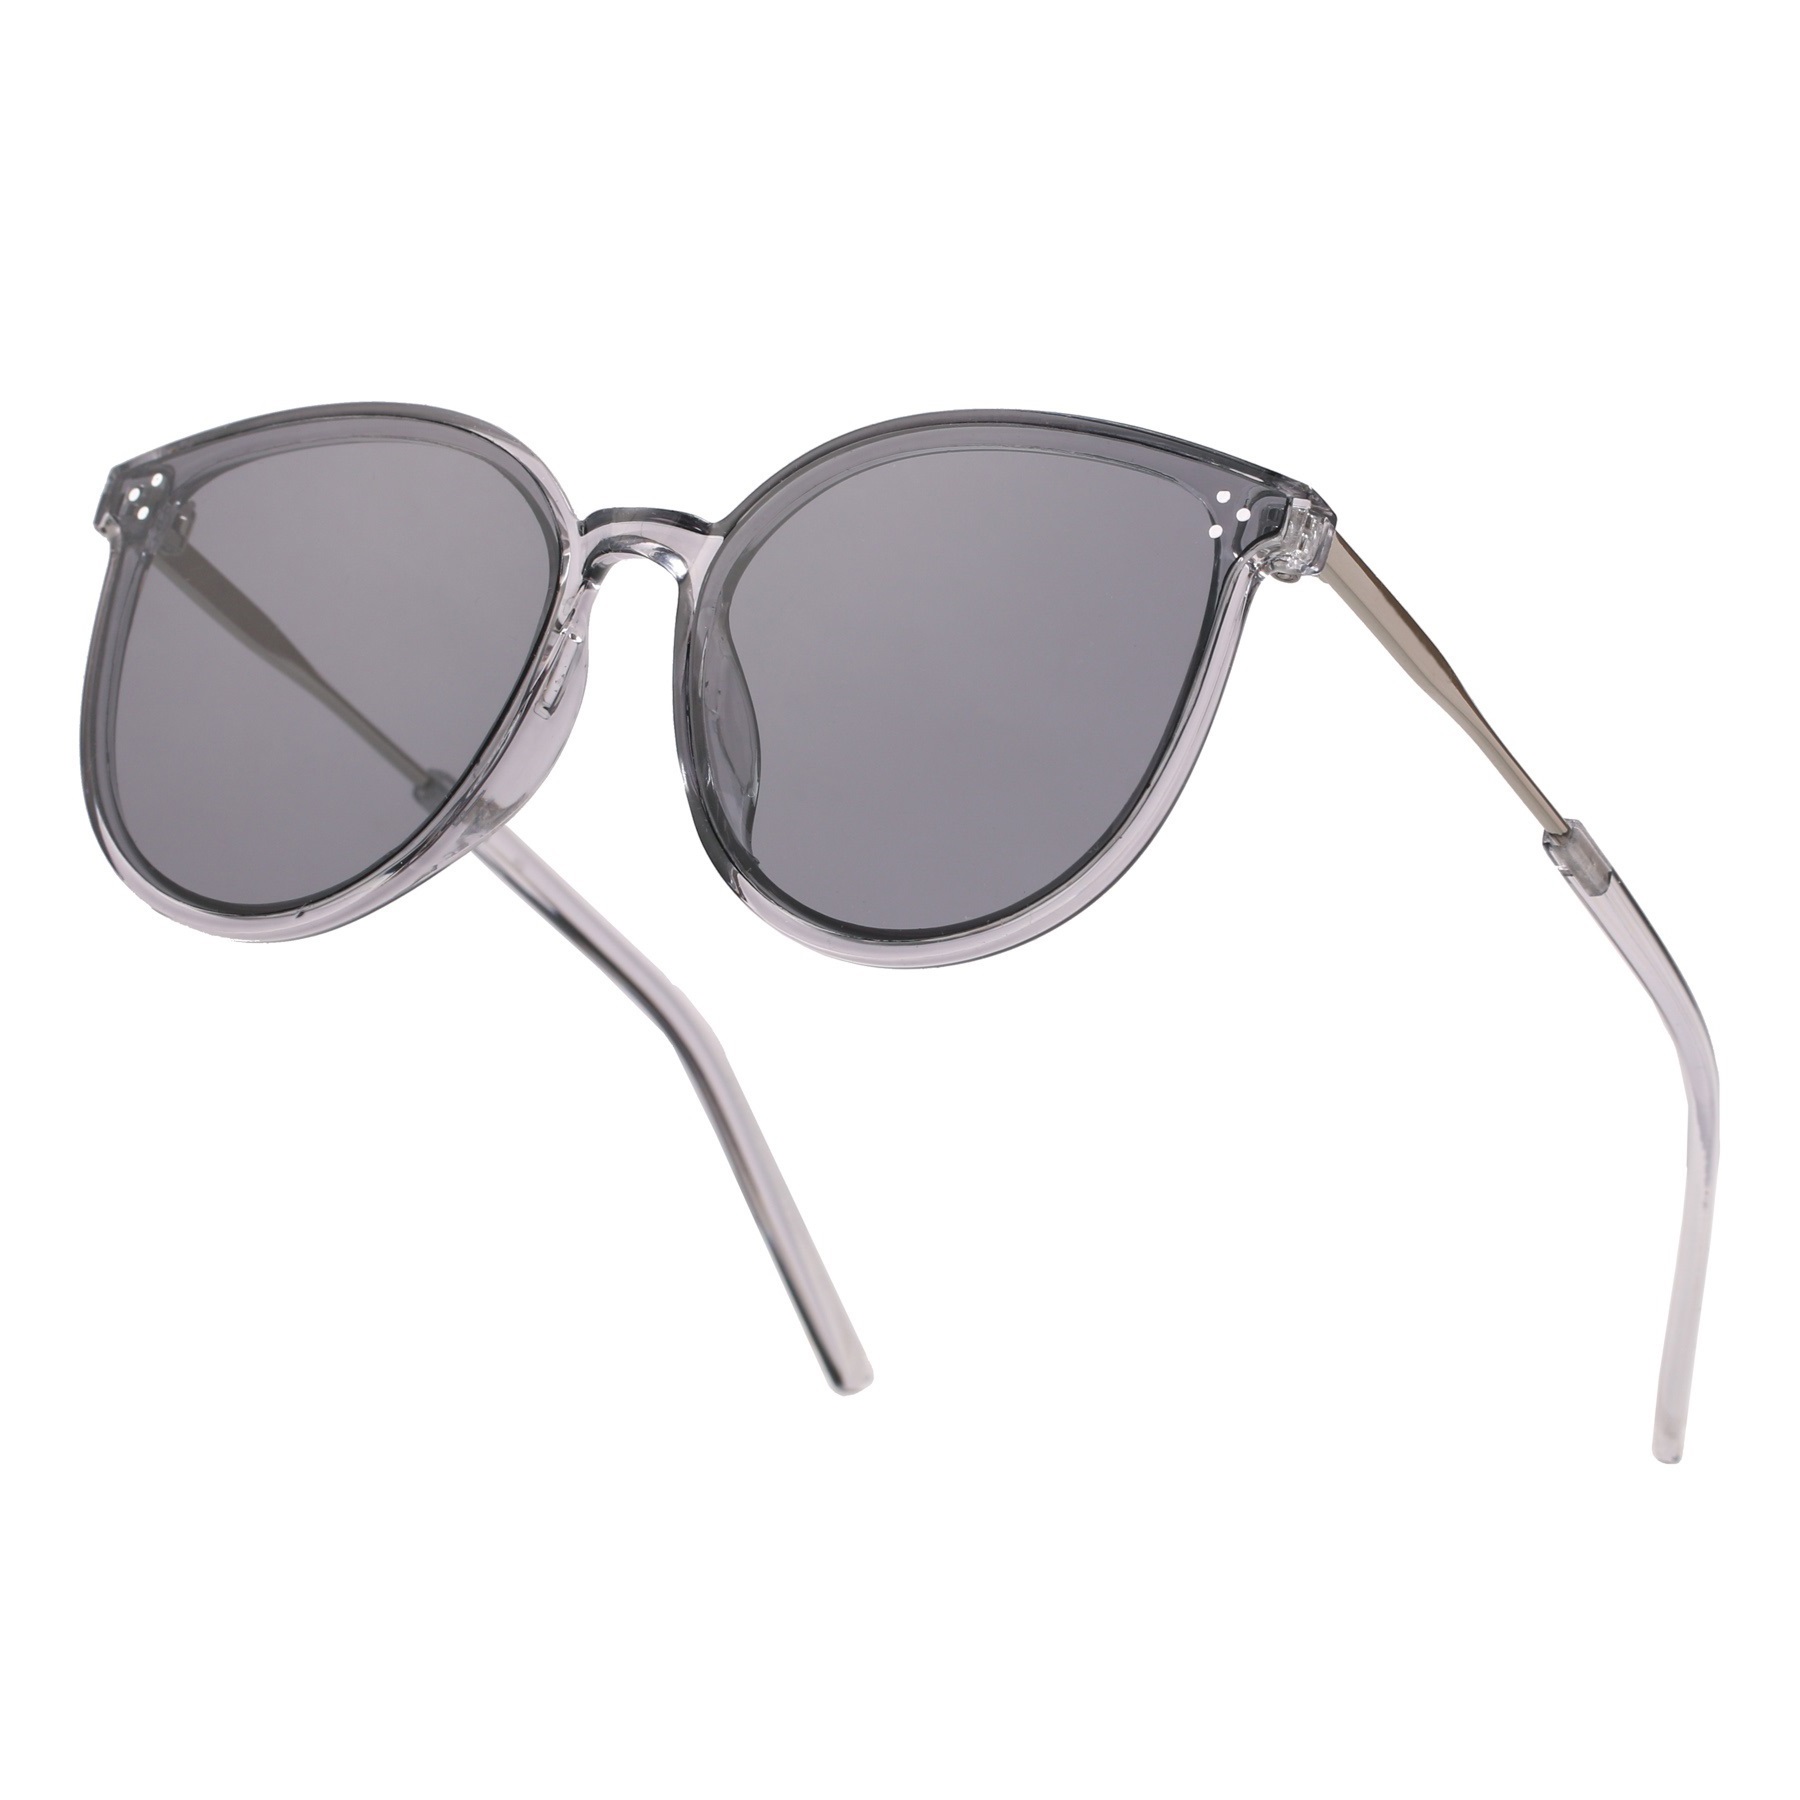 Buy Xpres Grey Colour Sunglasses Rectangle Shape Full Rim Silver Frame  Online